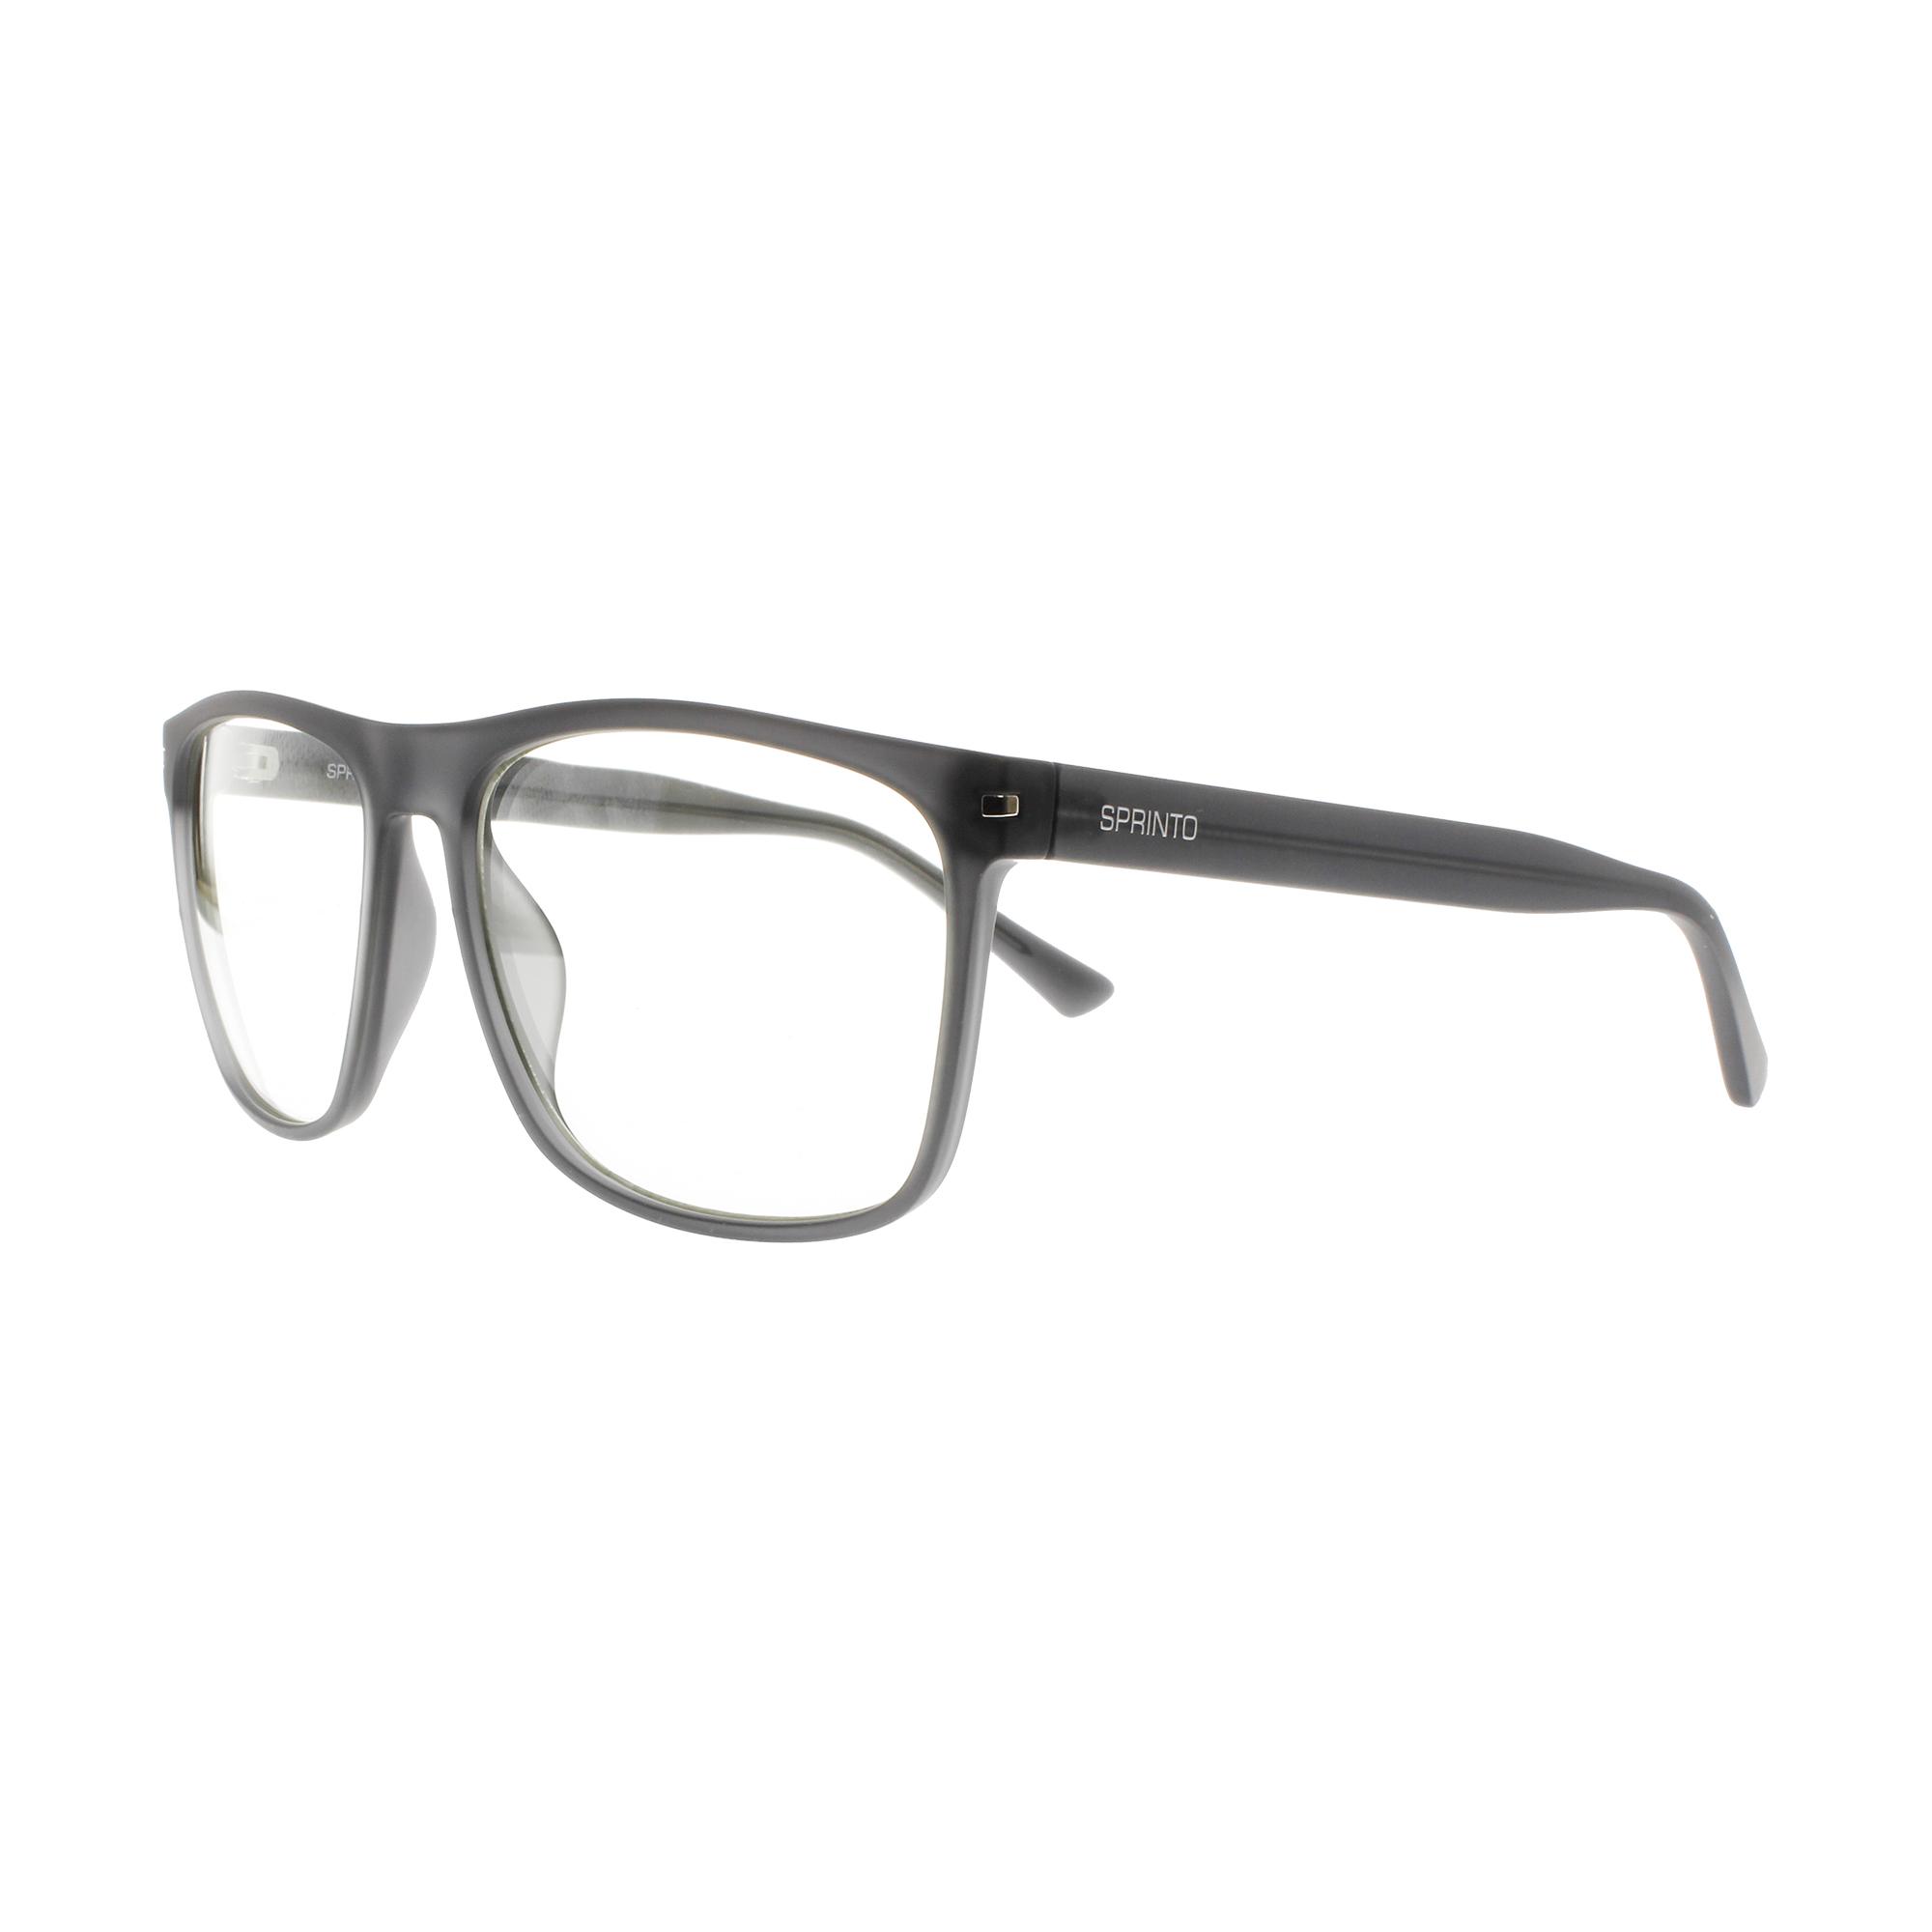 Sprinto Smartphone Glasses, Exbone - Blue Block review and price